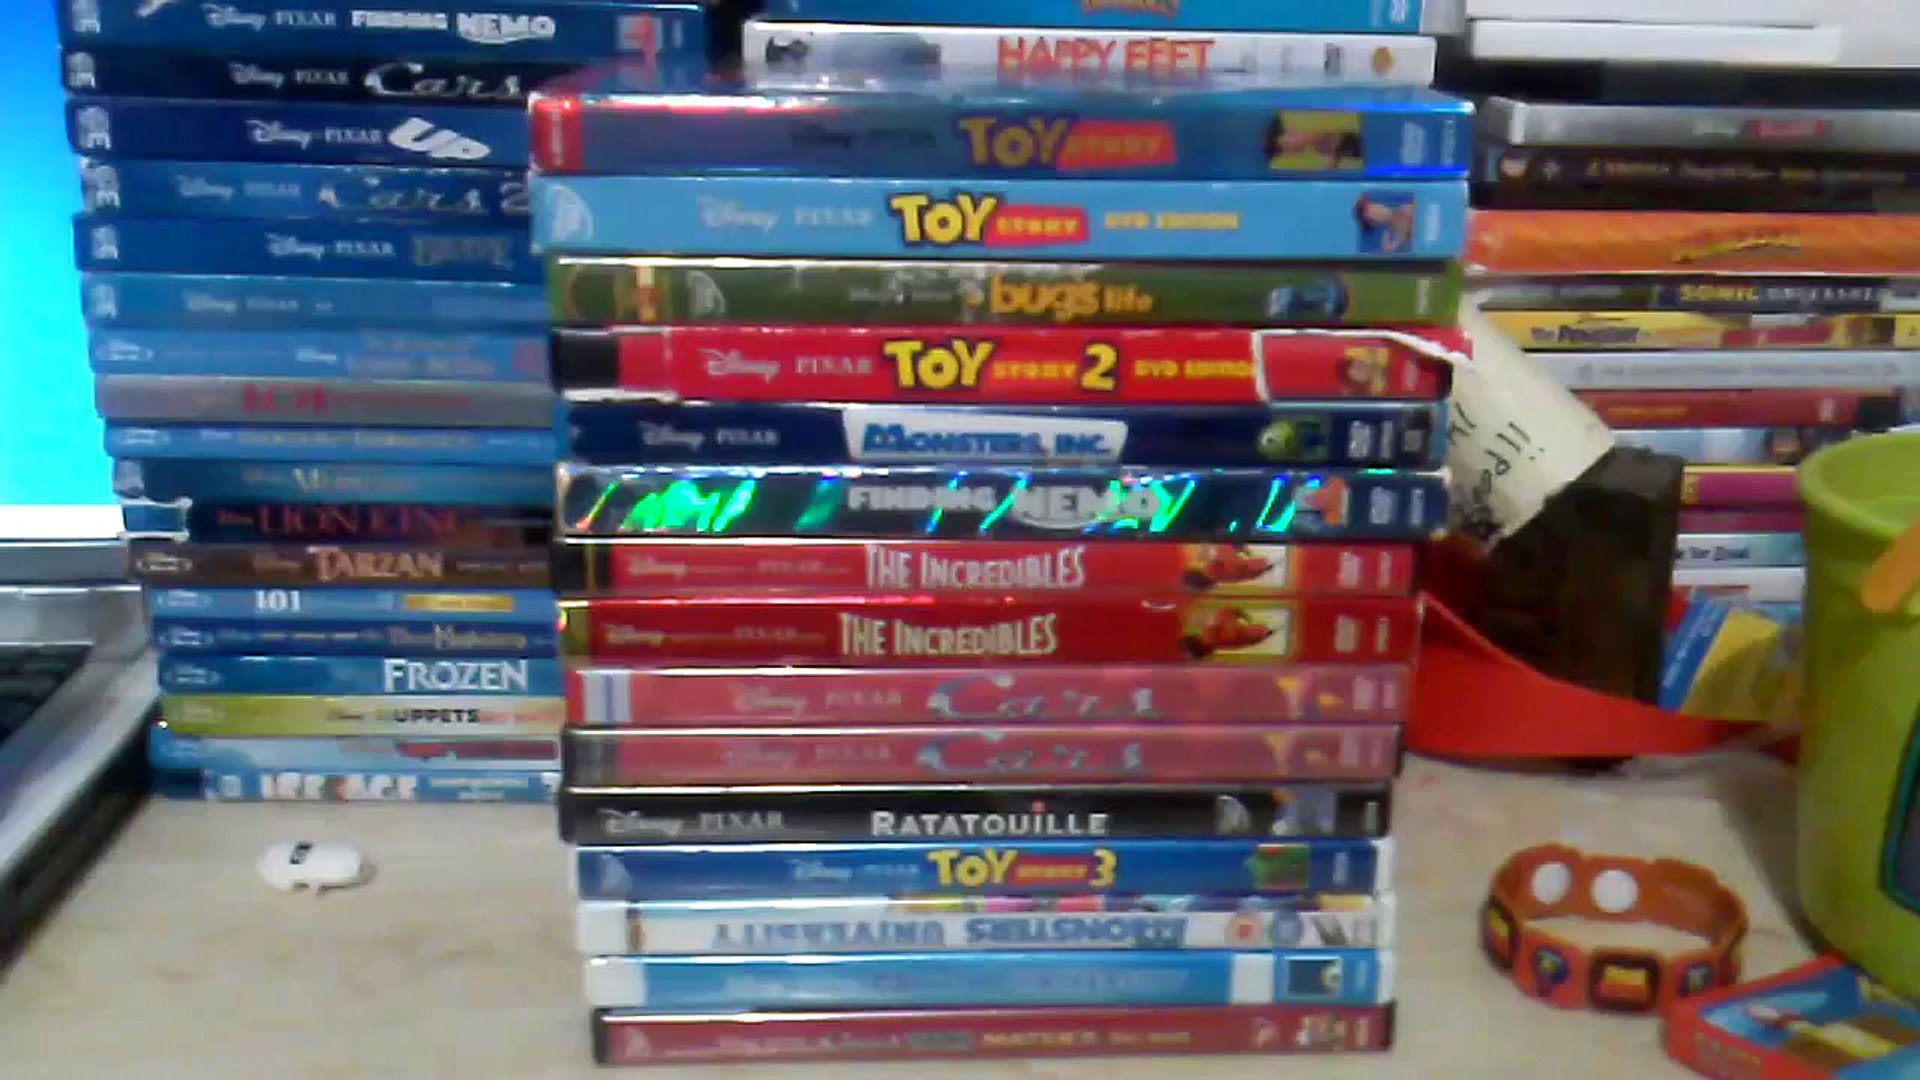 my disney pixar dvd blu ray collection - www.godoberta.com.